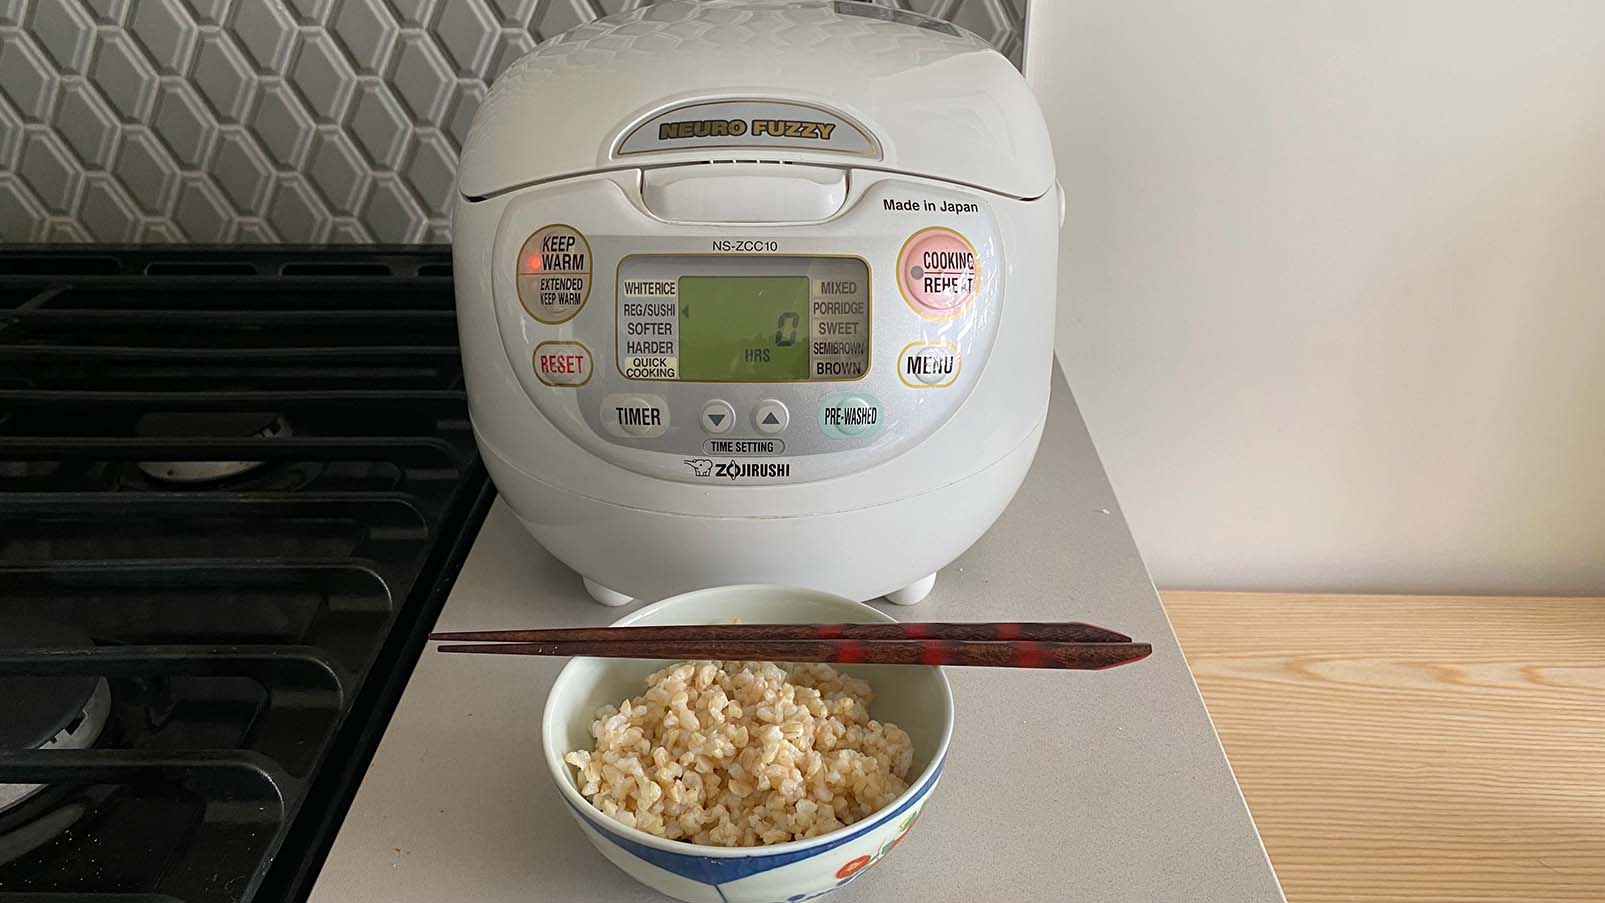 https://media.cnn.com/api/v1/images/stellar/prod/220511122400-zojirushi-neuro-fuzzy-rice-cooker-review-brown-rice.jpg?c=original